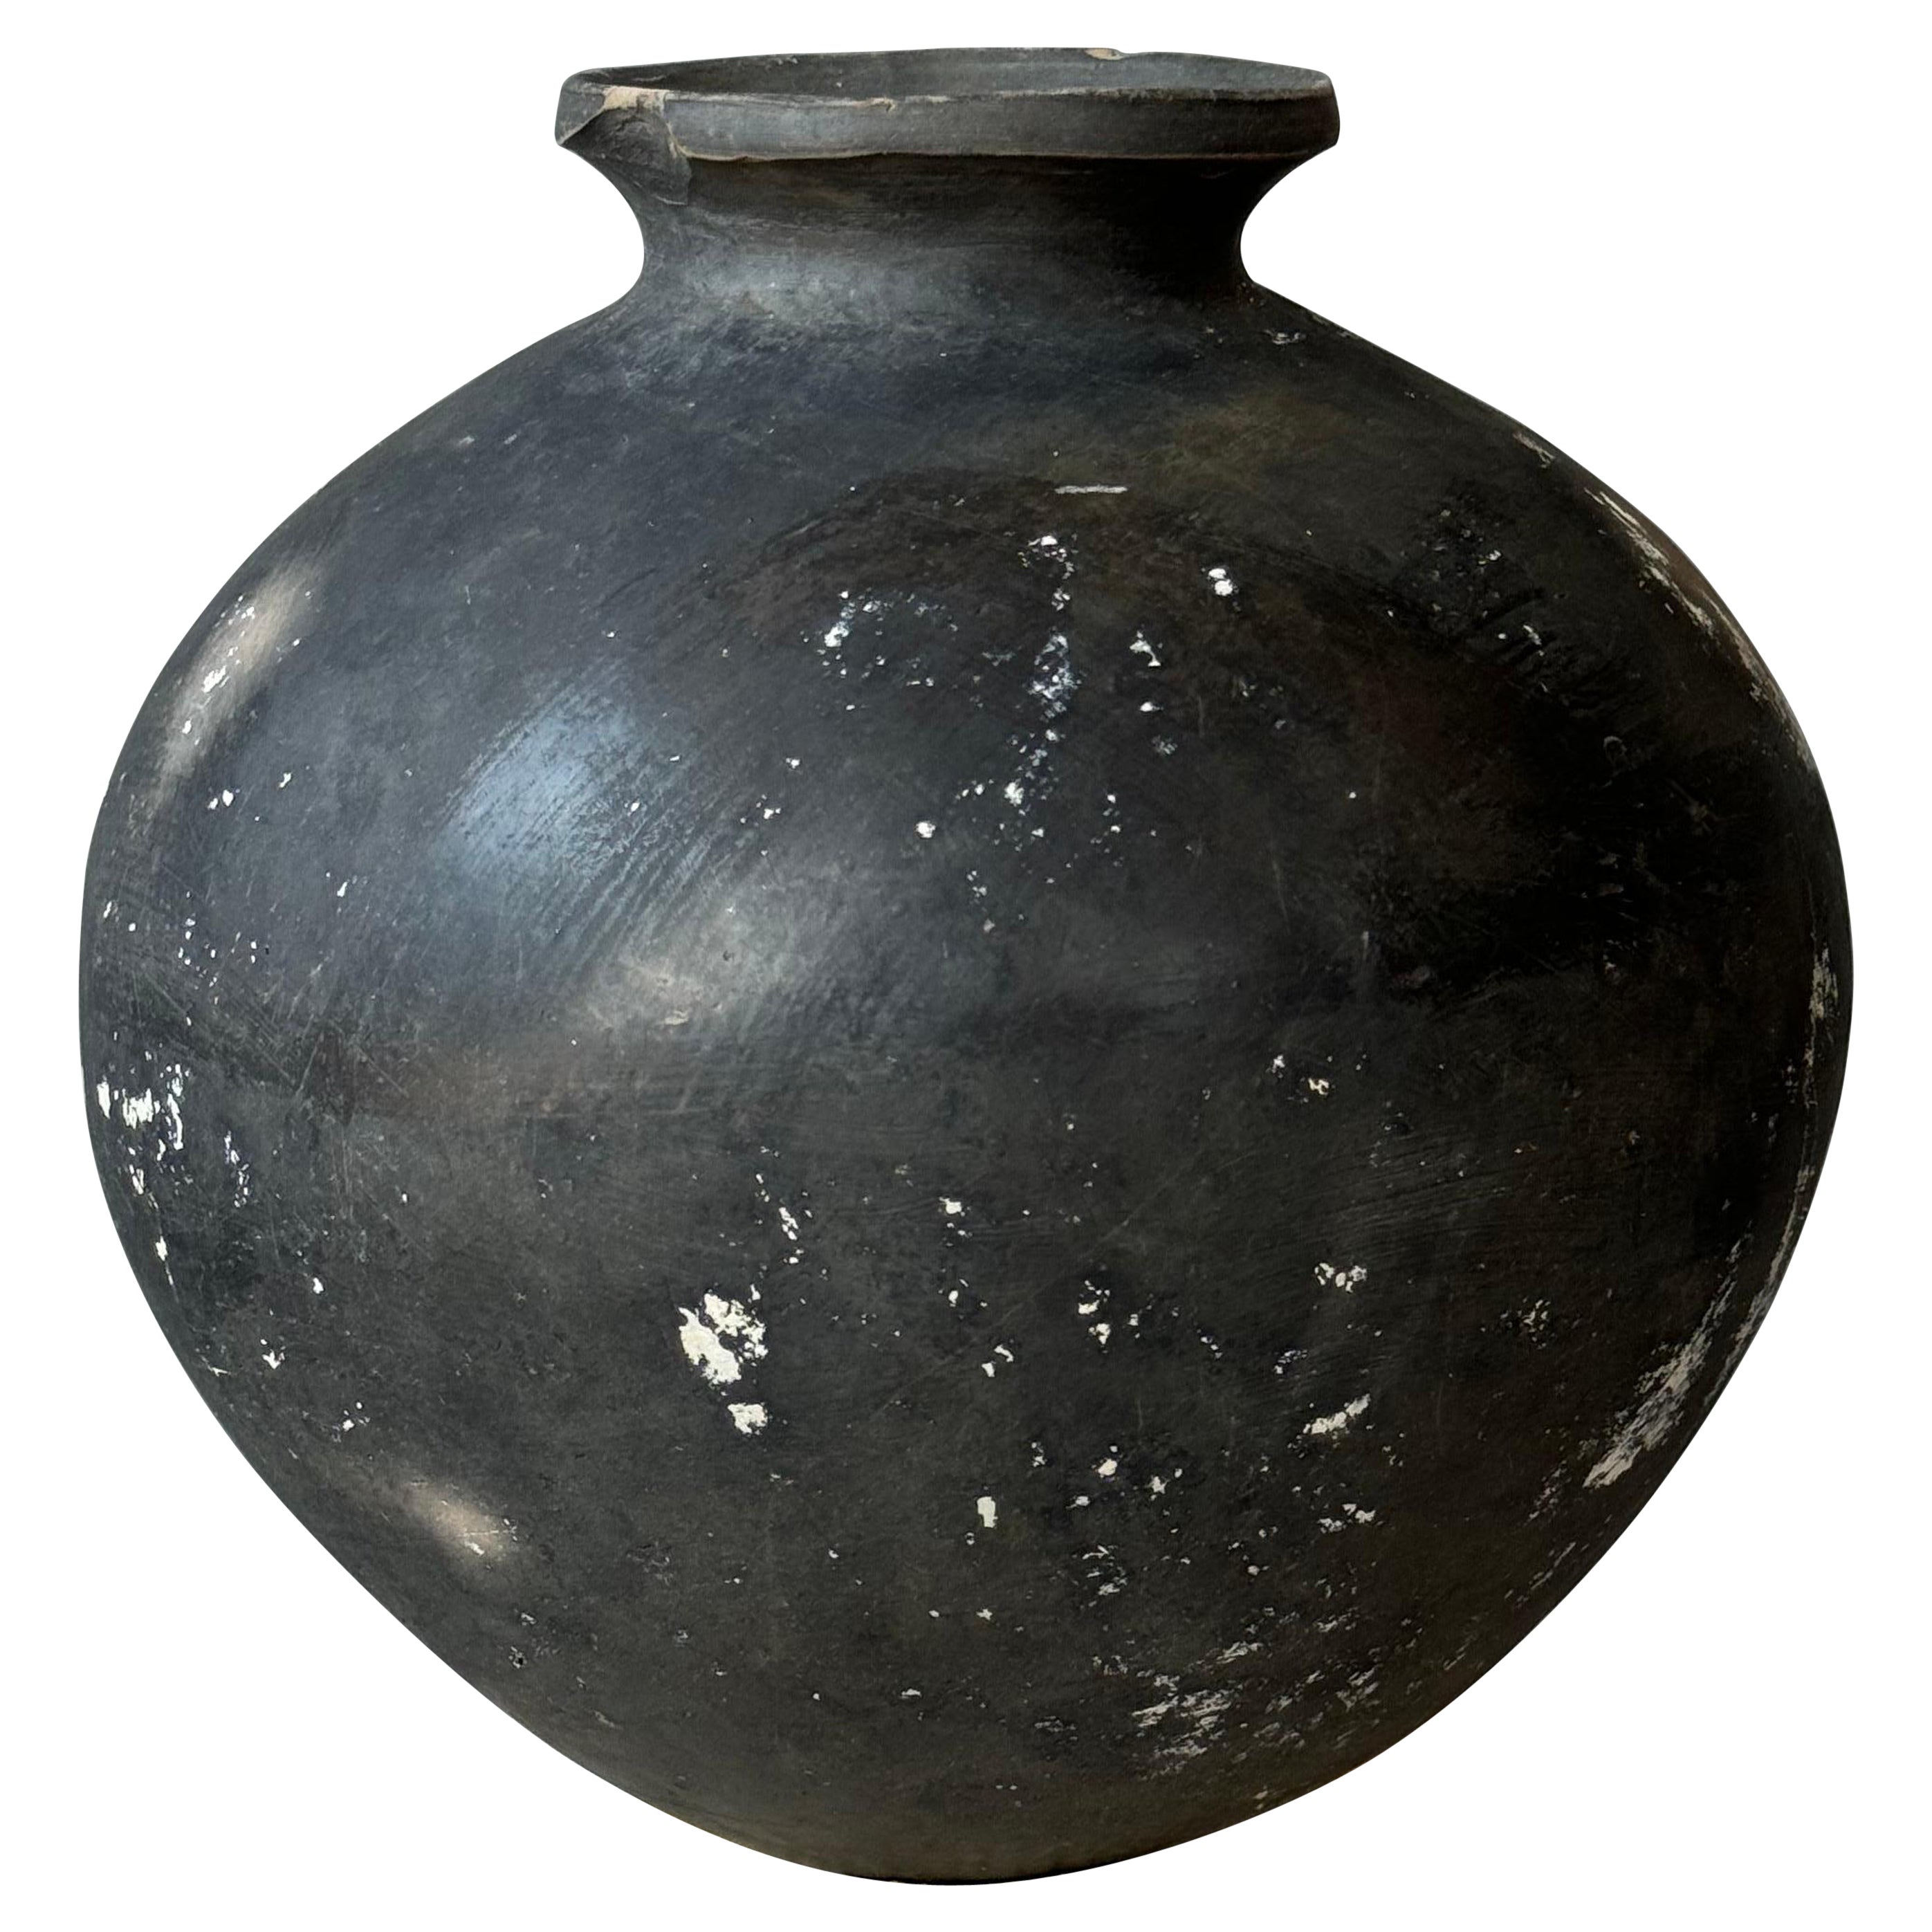 What makes black pottery black?